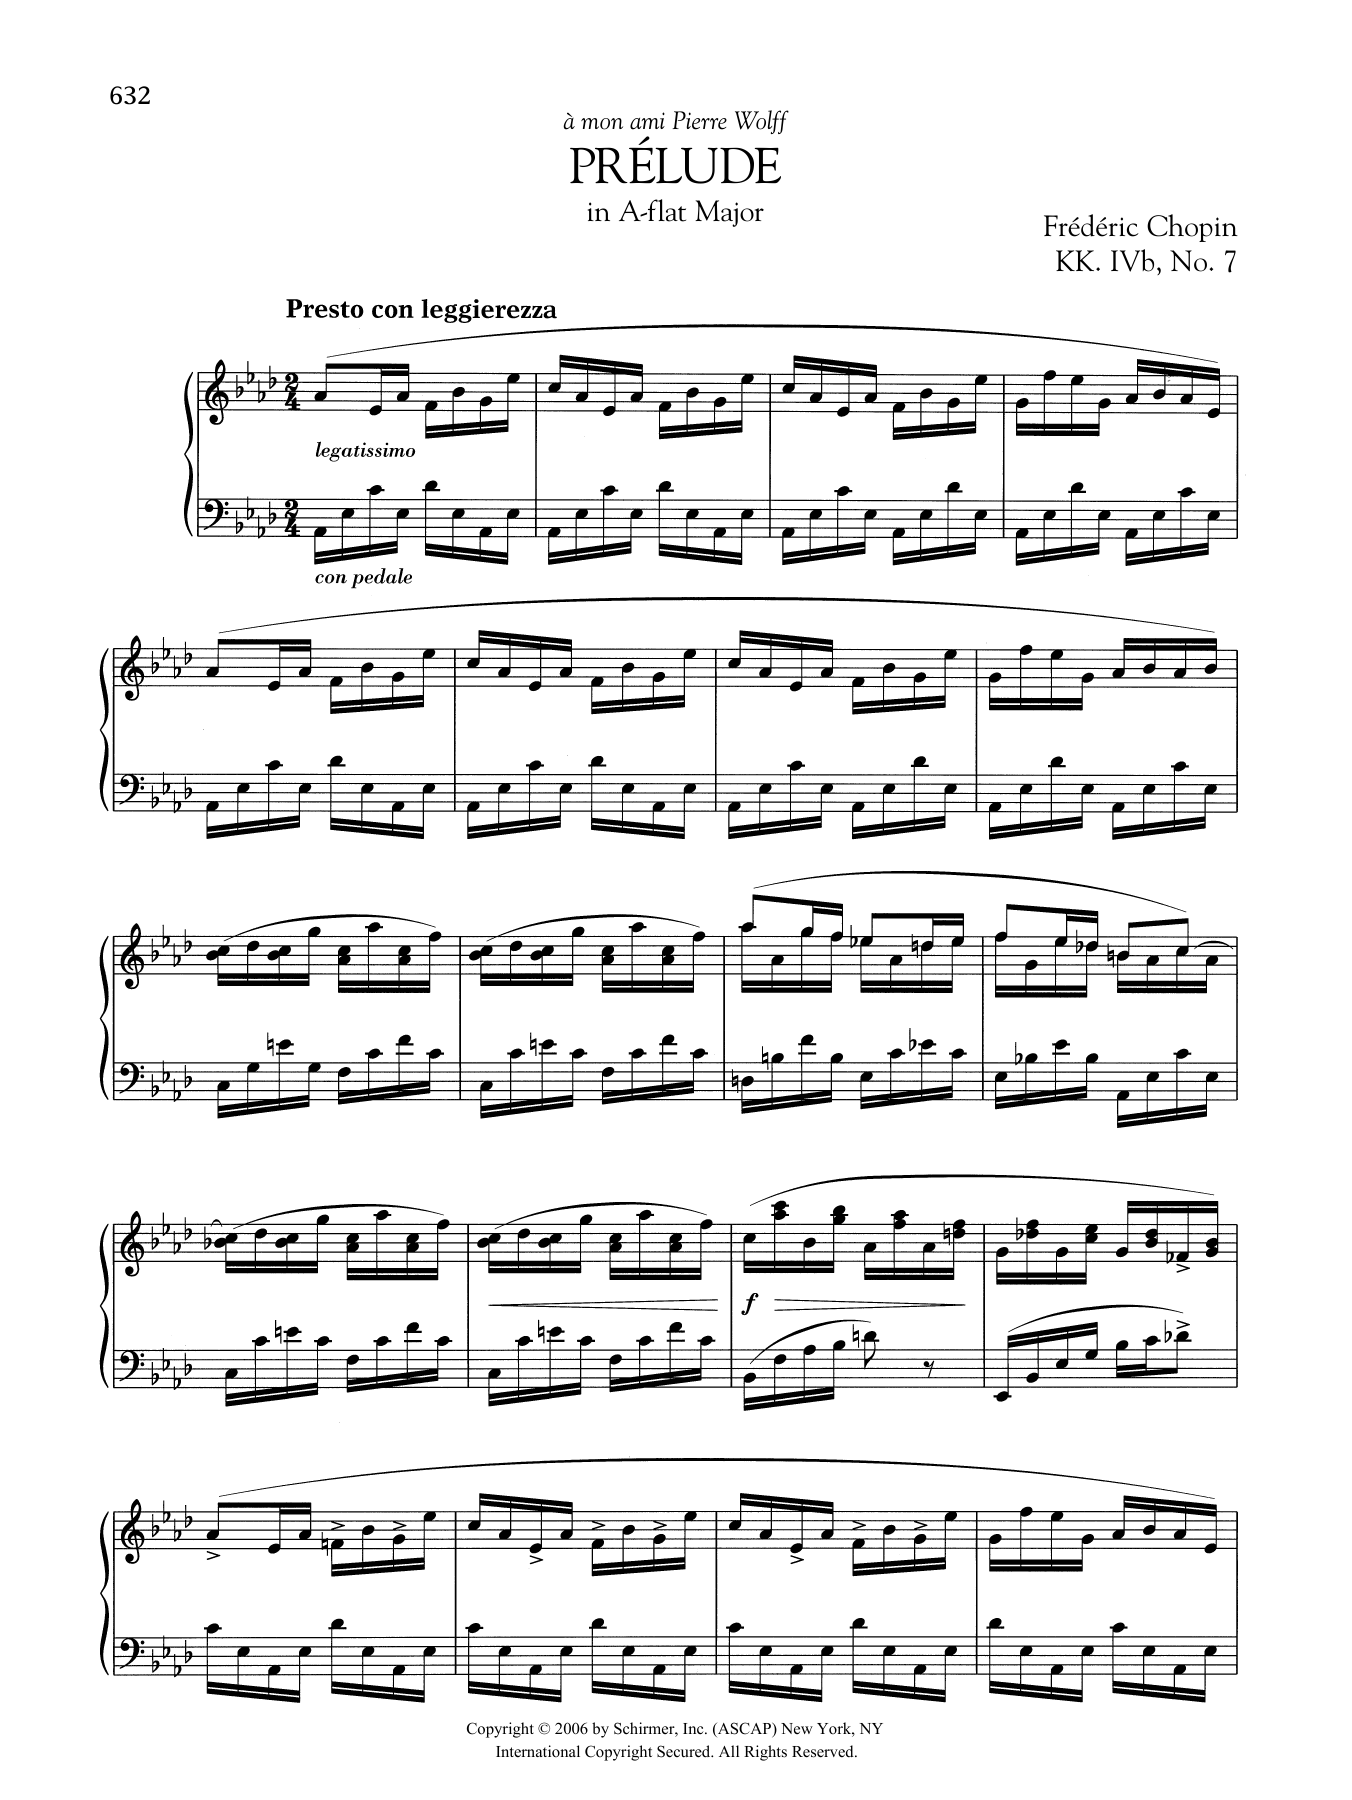 Download Frédéric Chopin Prélude in A-flat Major, KK. IVb, No. Sheet Music